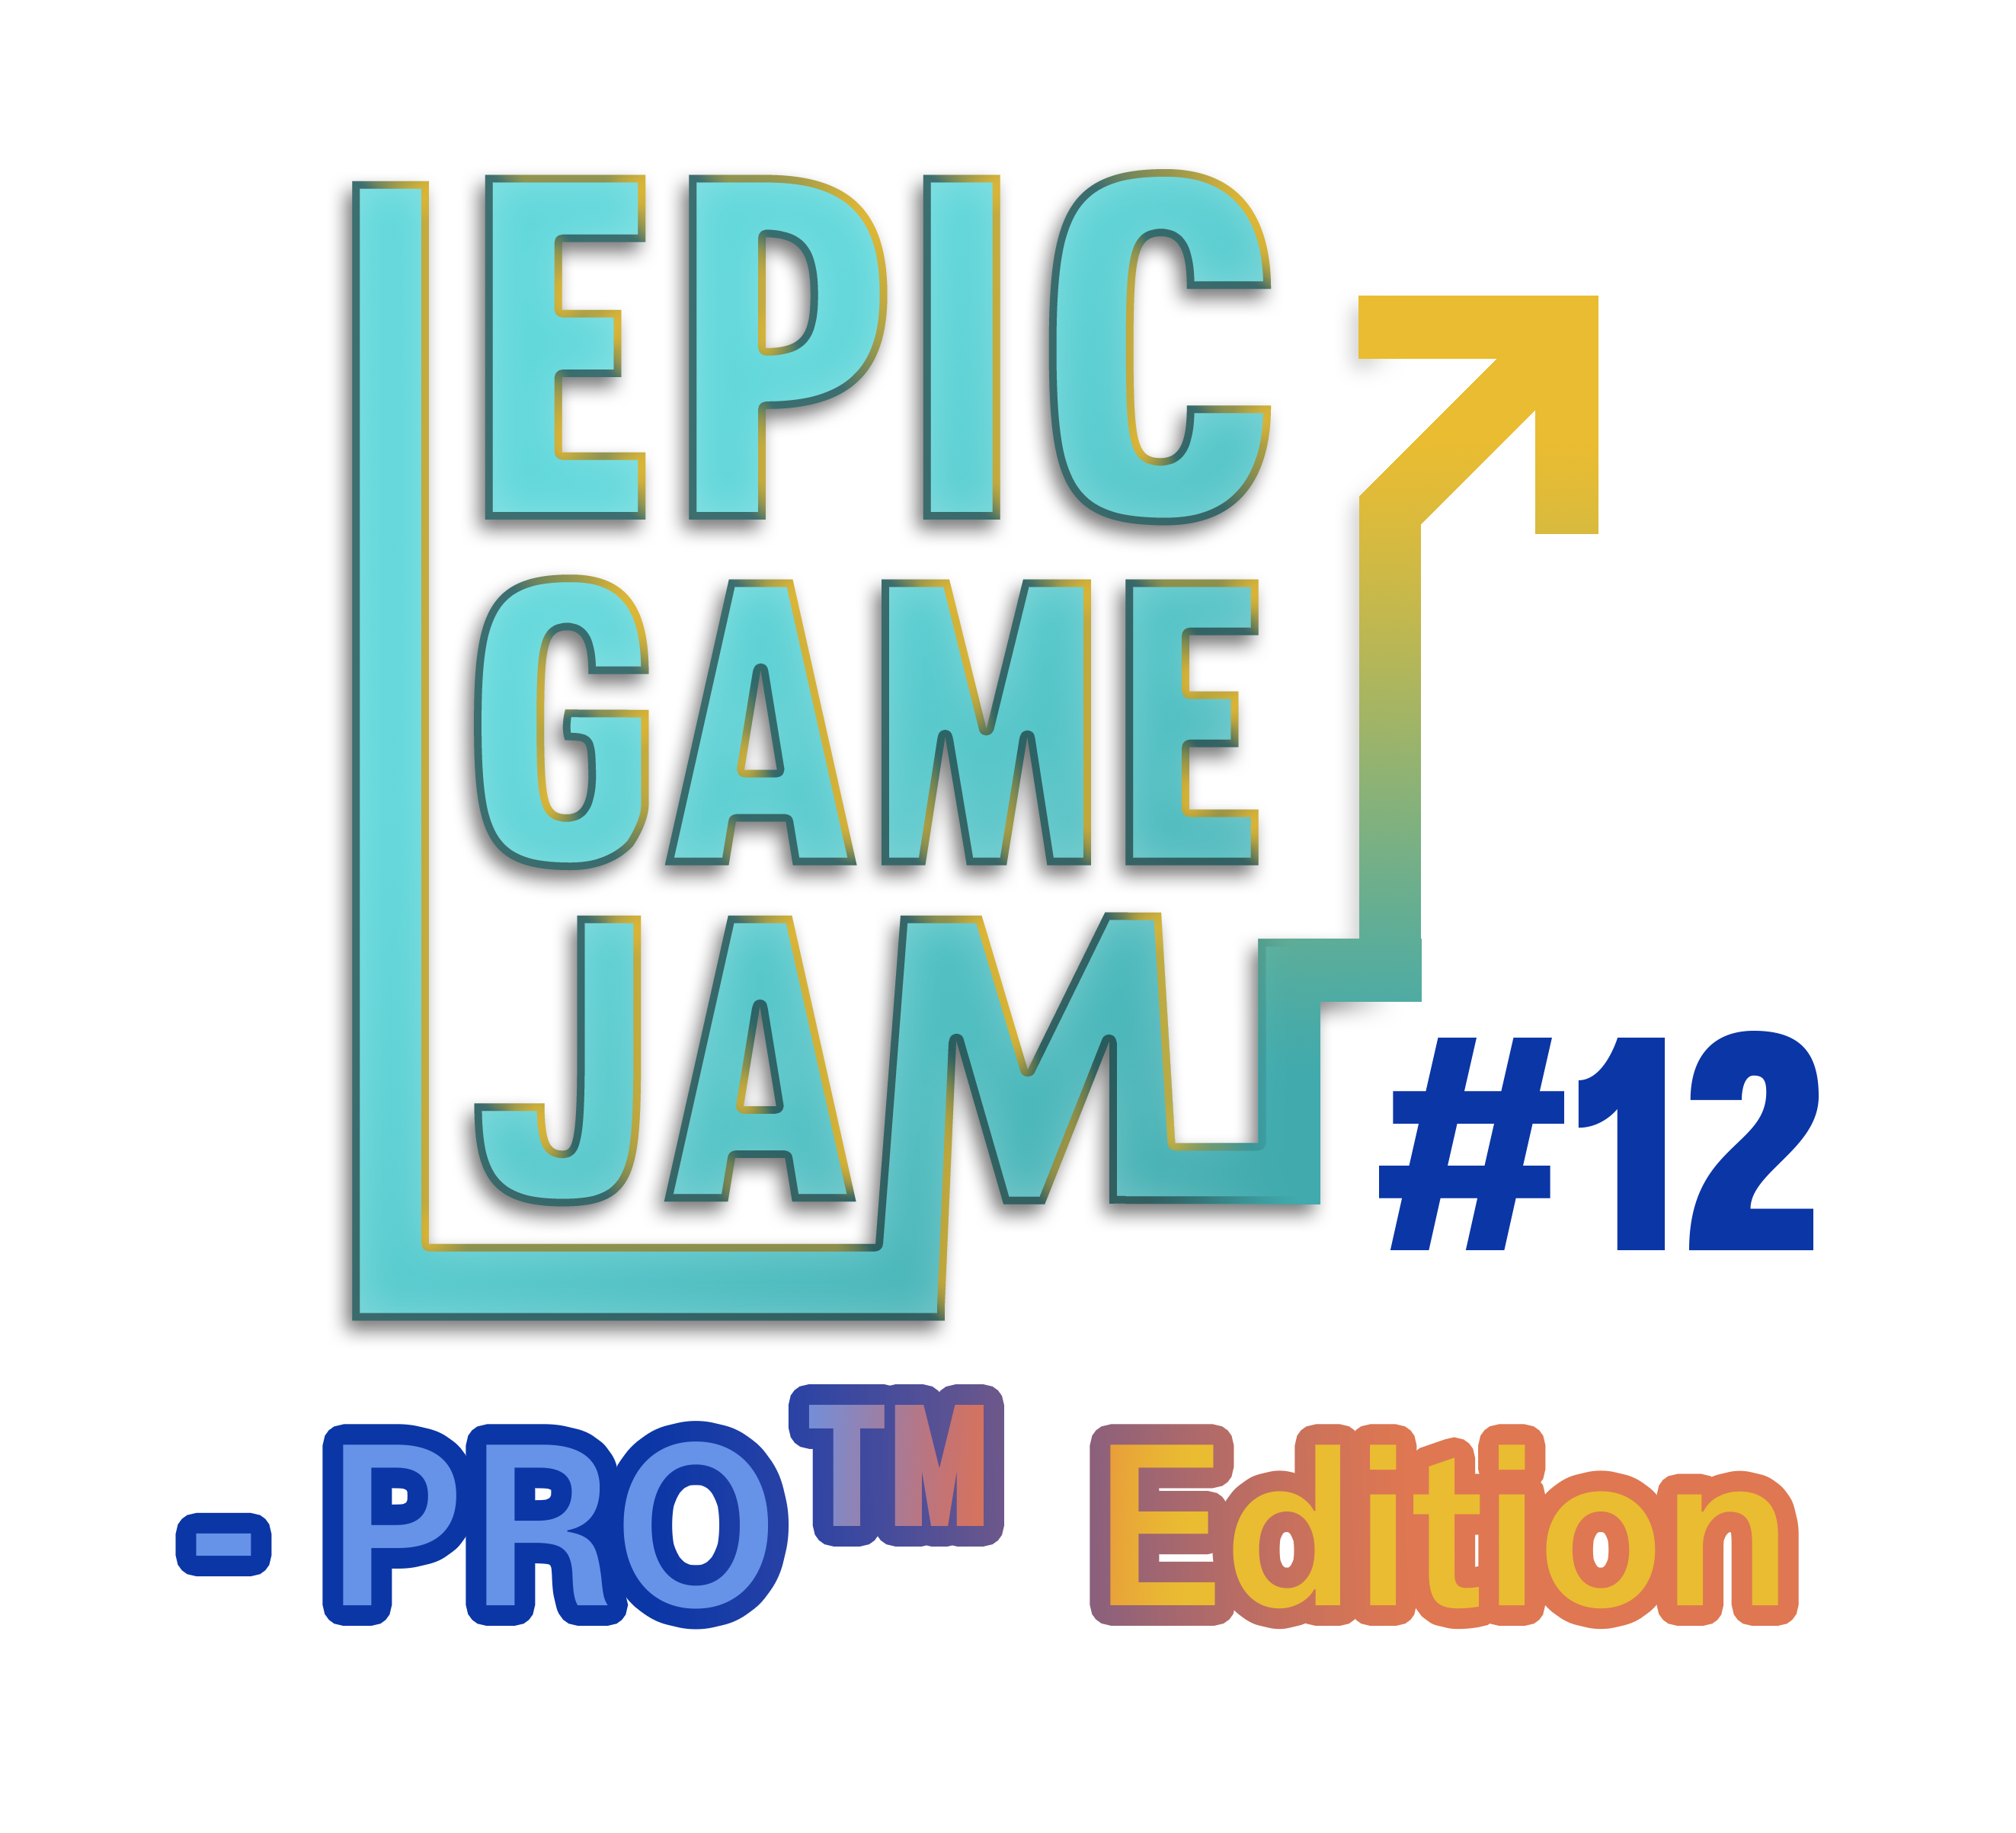 Epic Game Jam